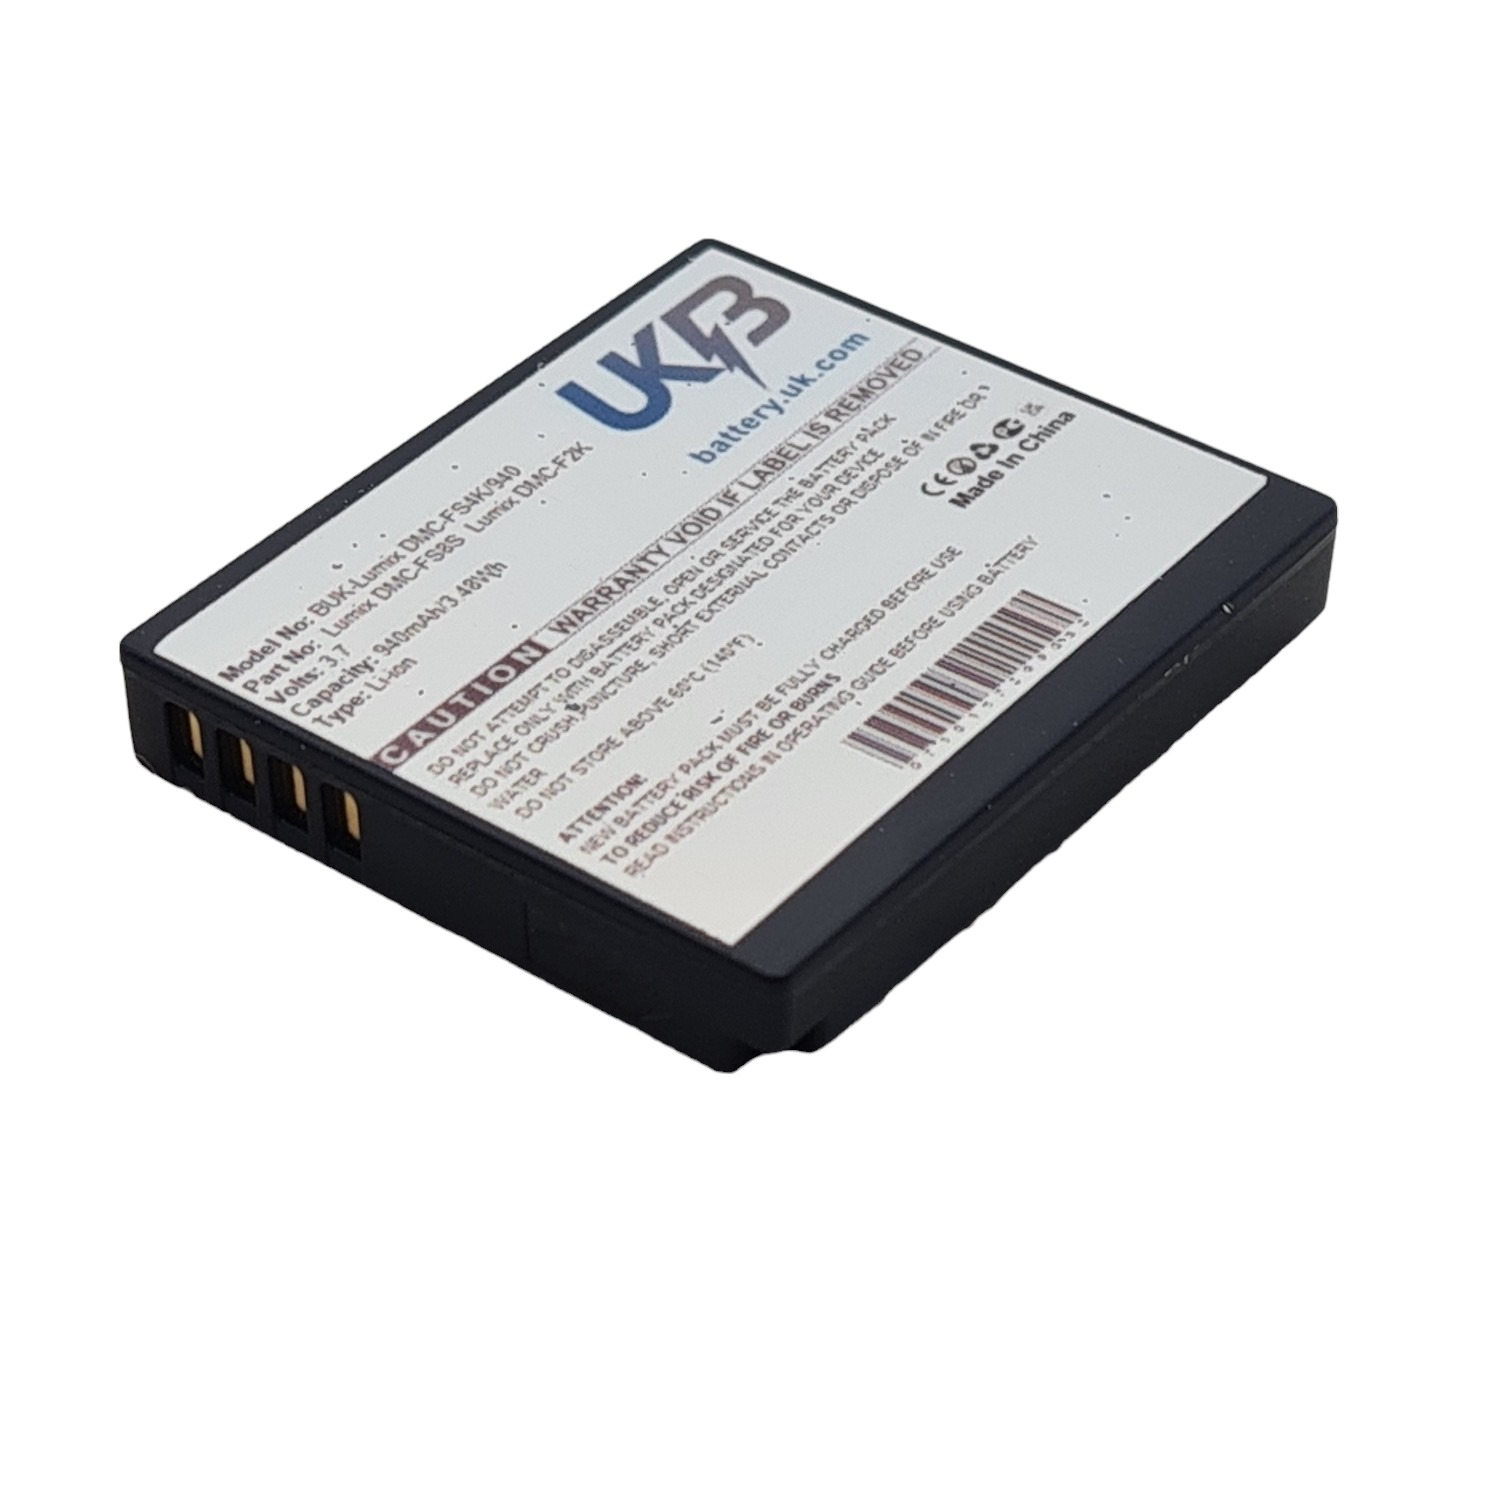 PANASONIC Lumix DMC FH20 Compatible Replacement Battery